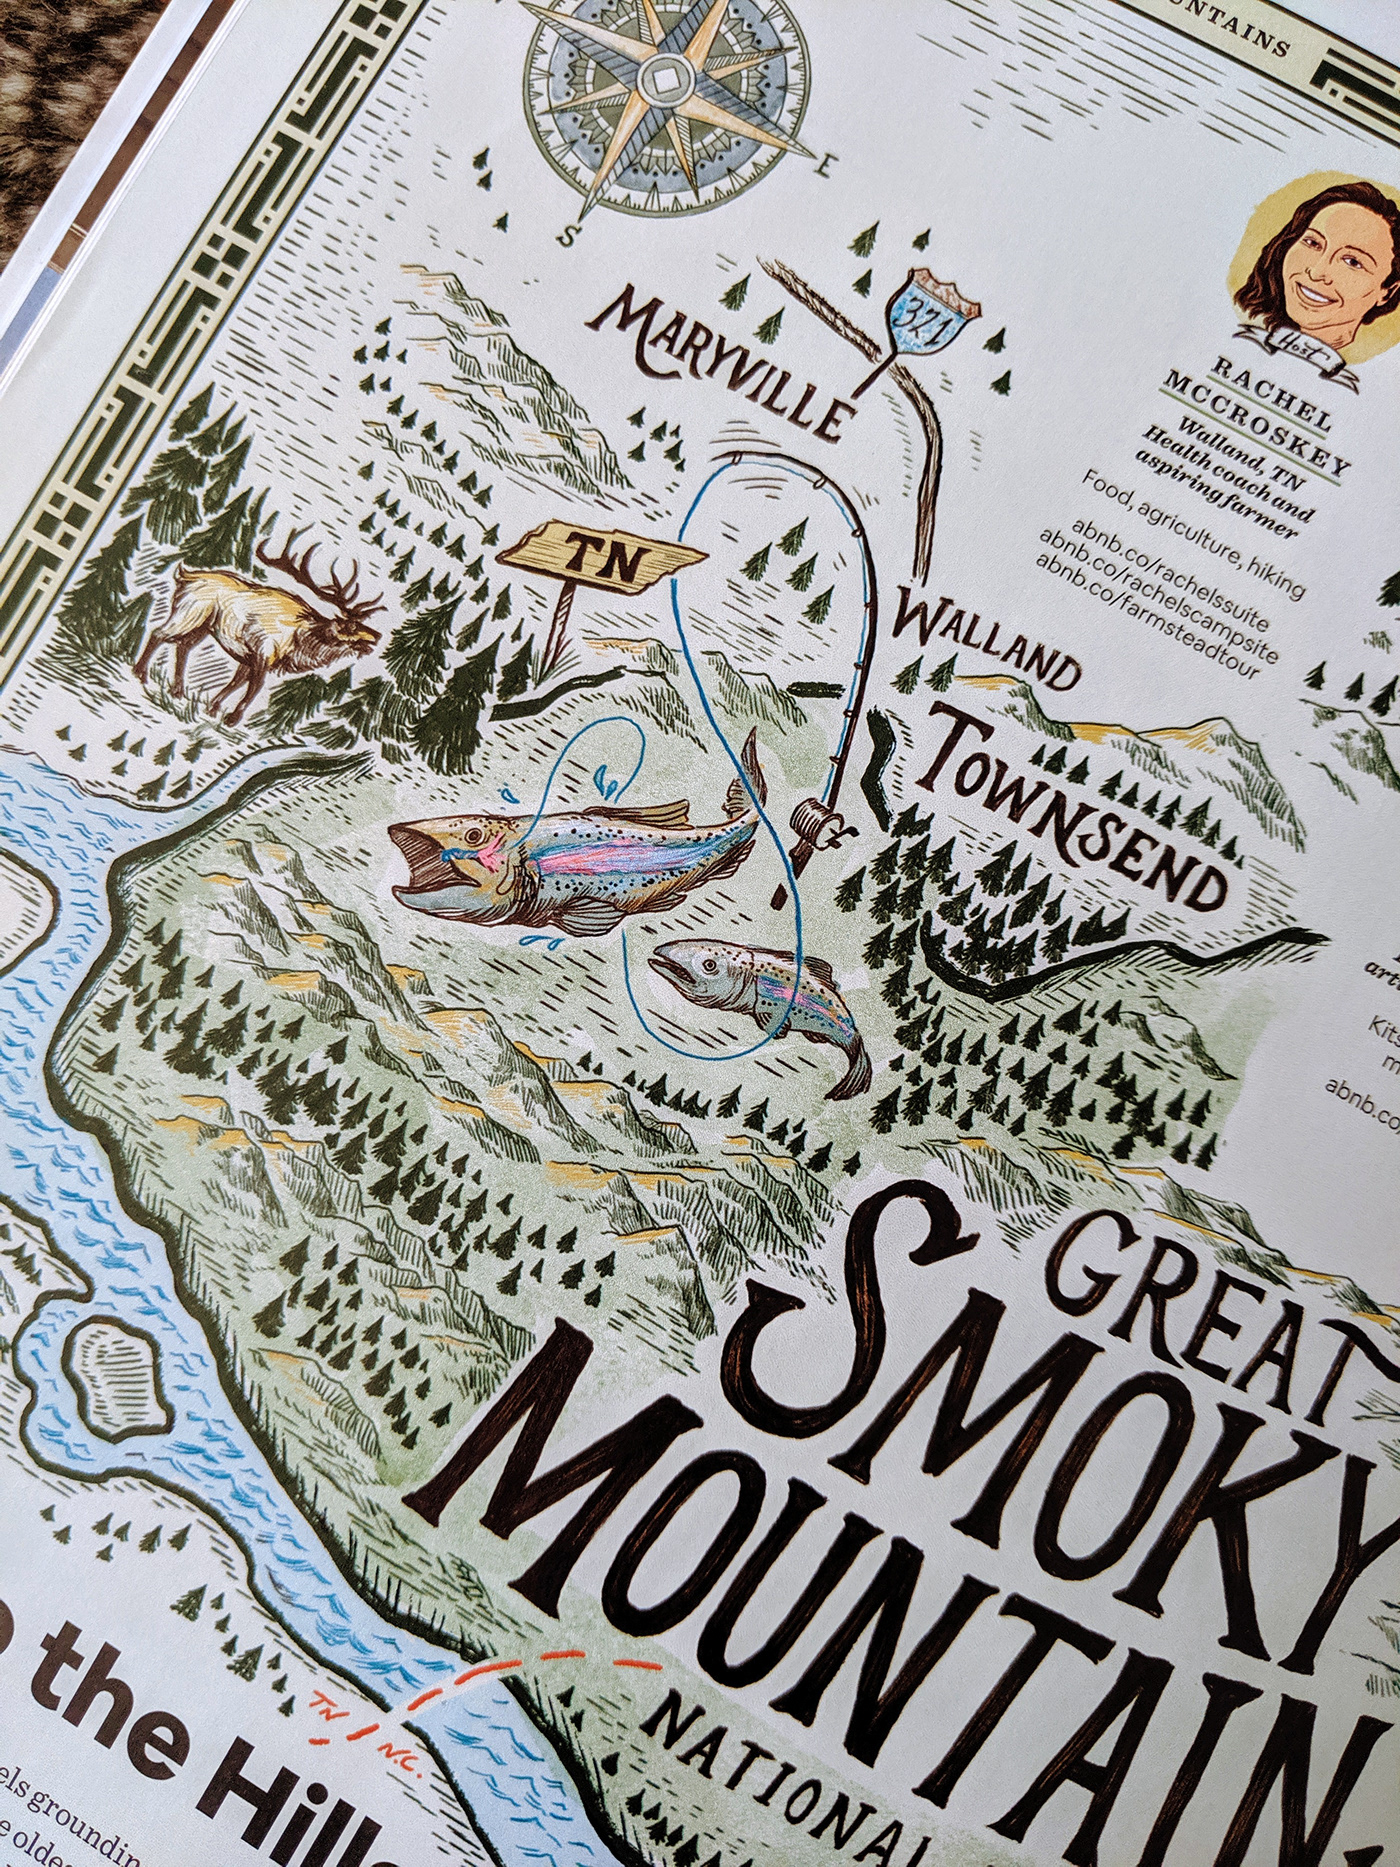 Smoky Mountains National Park illustrated map Infomap wildlife derik hobbs nature illustrator bird watching smokies Black Bear